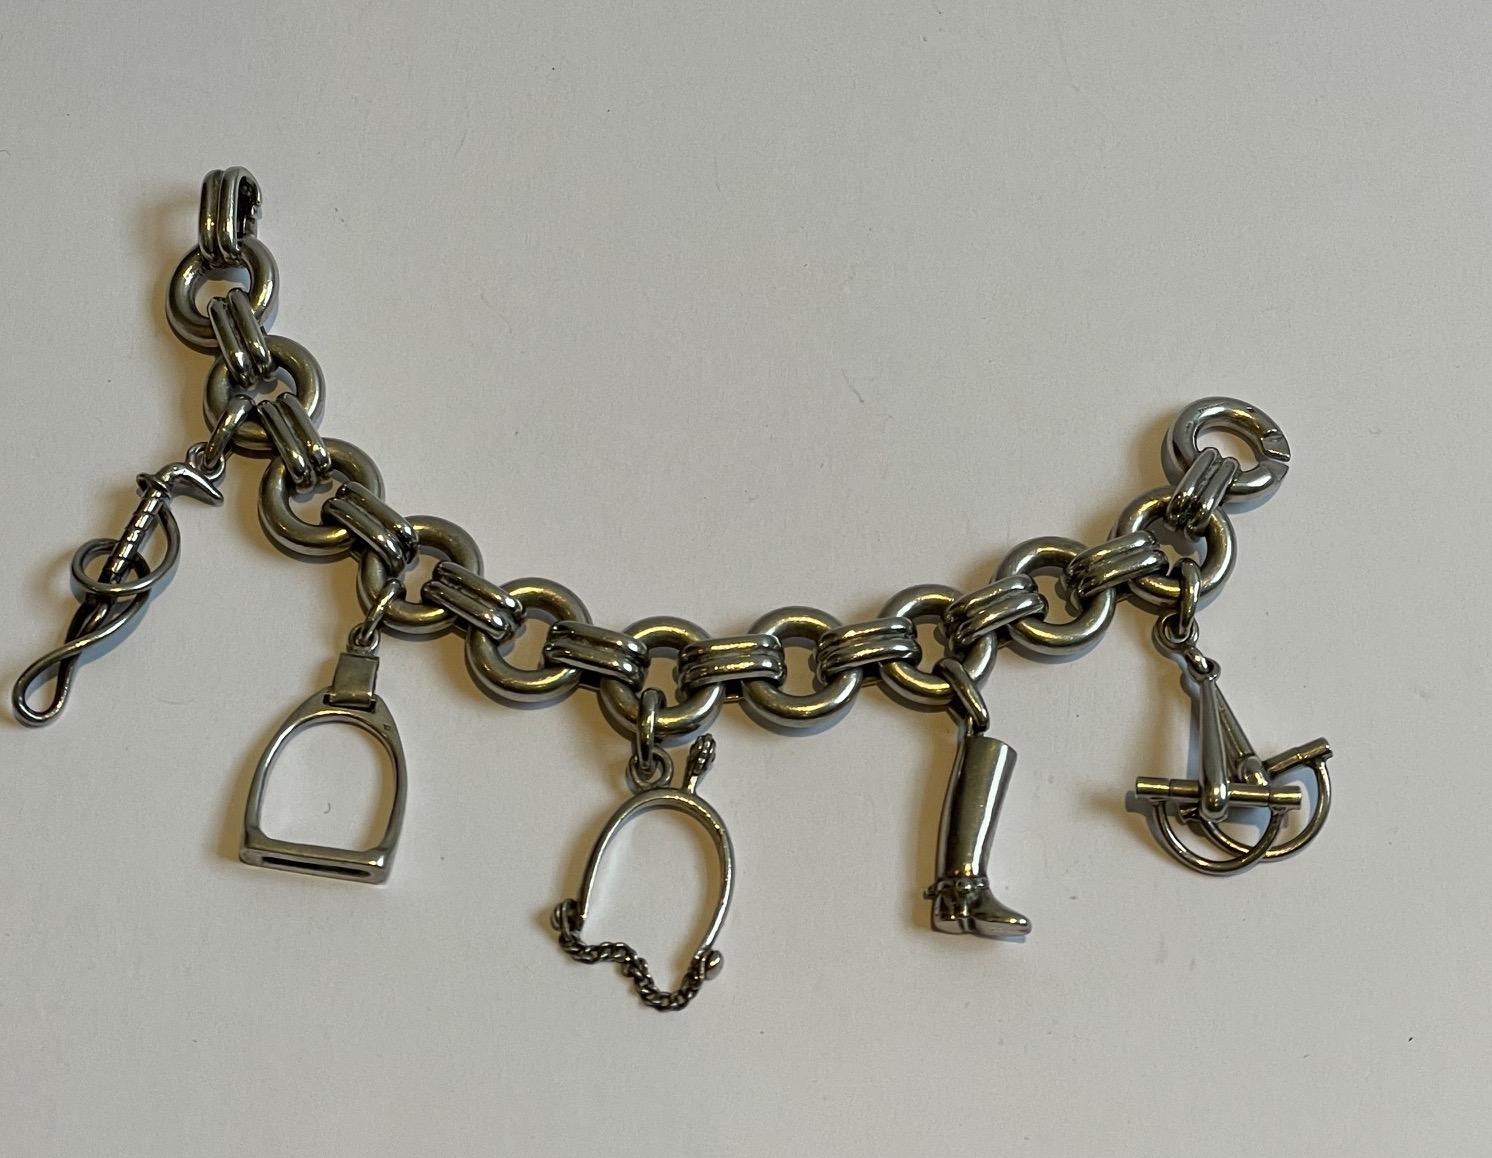 Artisan HERMÈS ATTRIBUTED Rare Horse Equine Silver Charm Bracelet C.1950